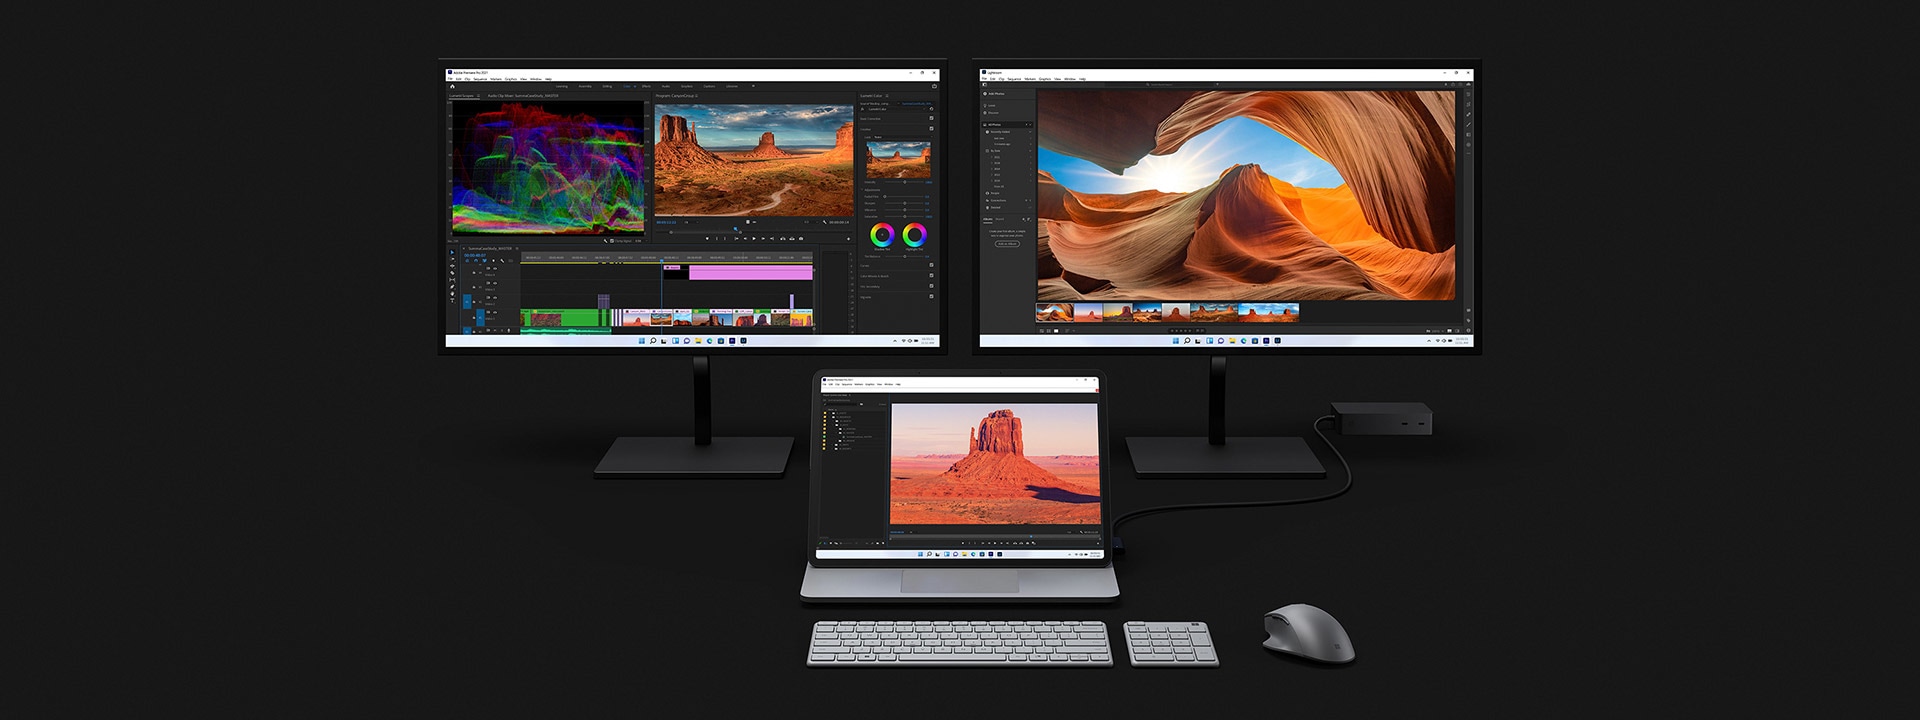 Surface Laptop Studio didok pada dua monitor yang lebih besar sedang digunakan untuk mengedit video.